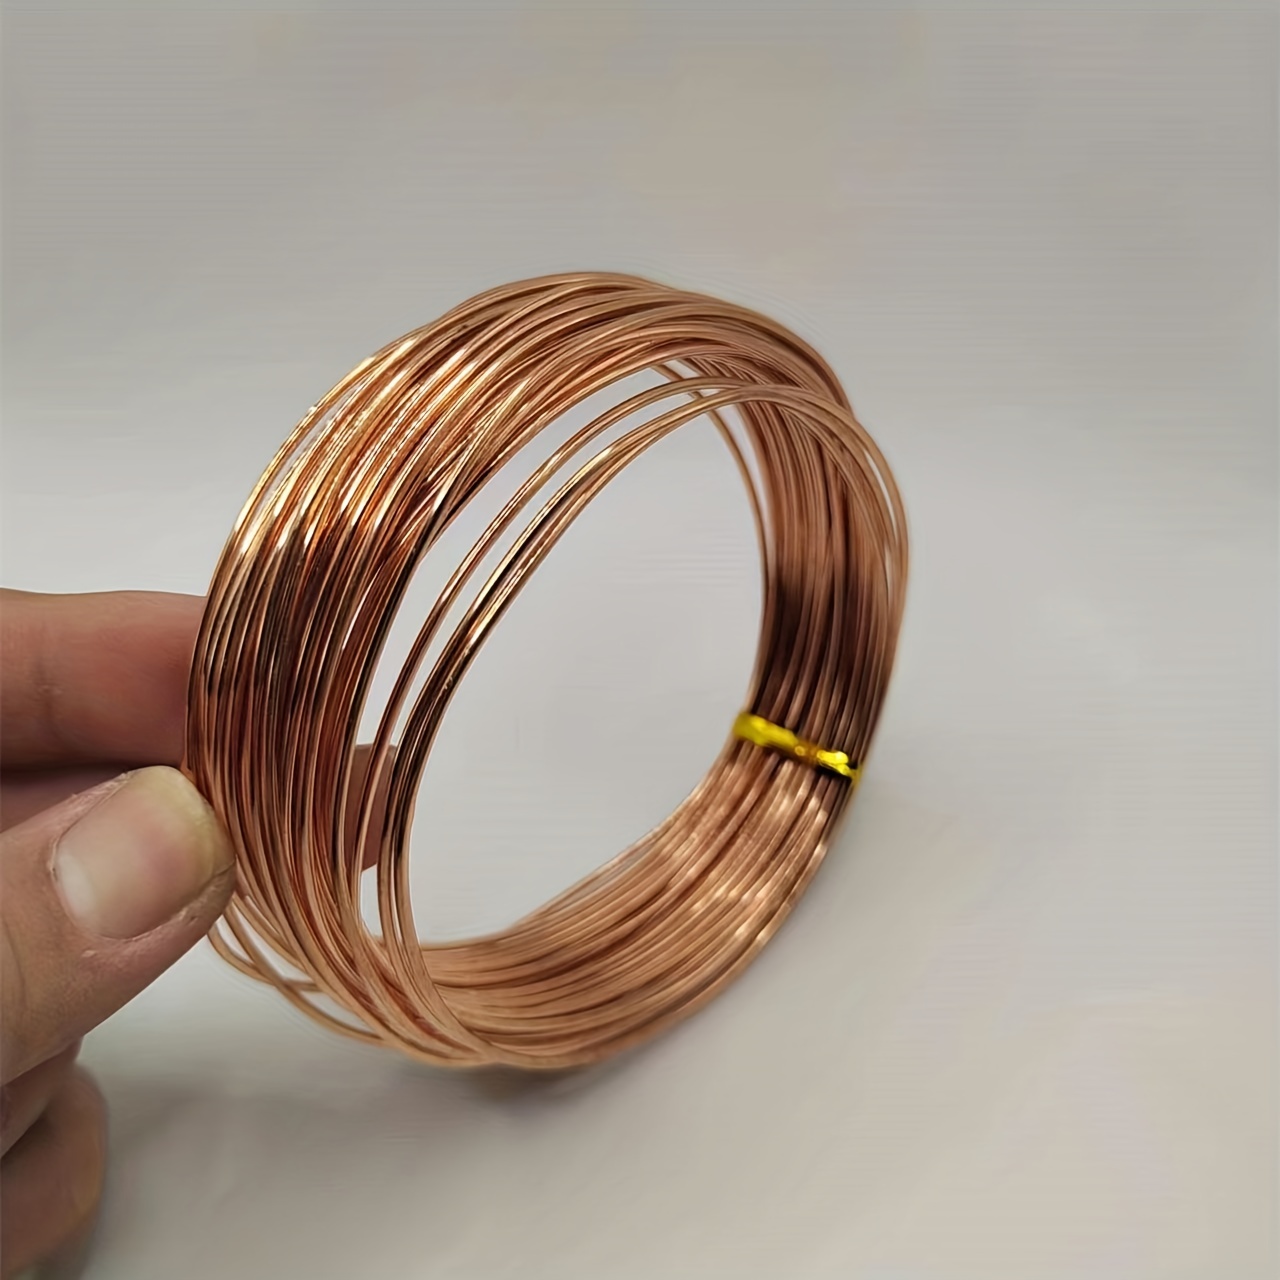 Copper Wire For Gardening, 16 Gauge/ 1.3 Mm Diameter,127 Feet / 39M, 1  Pound Spool - AliExpress